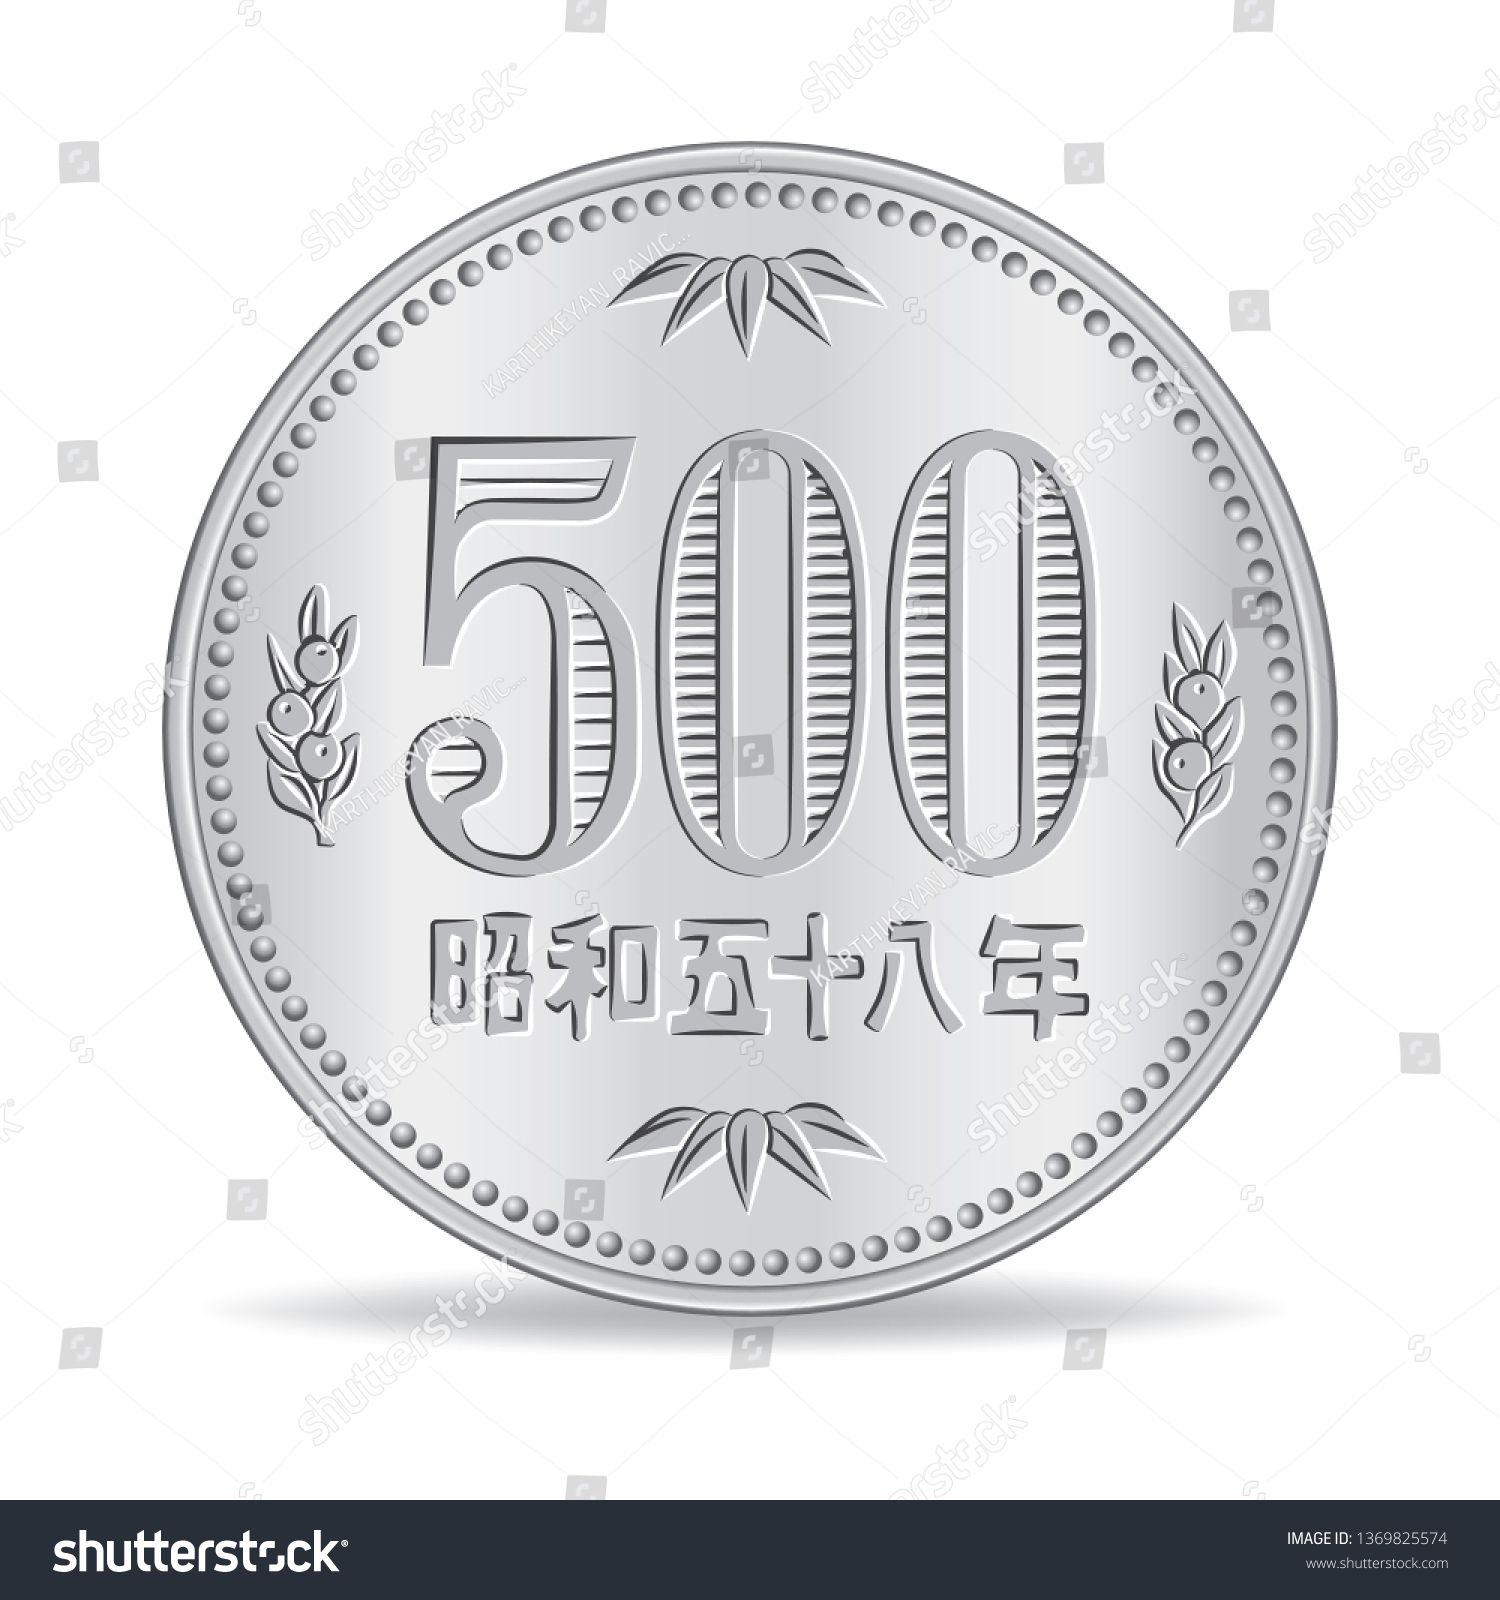 Japanese five hundred yen coin isolated white background in vector illustration #1369825574